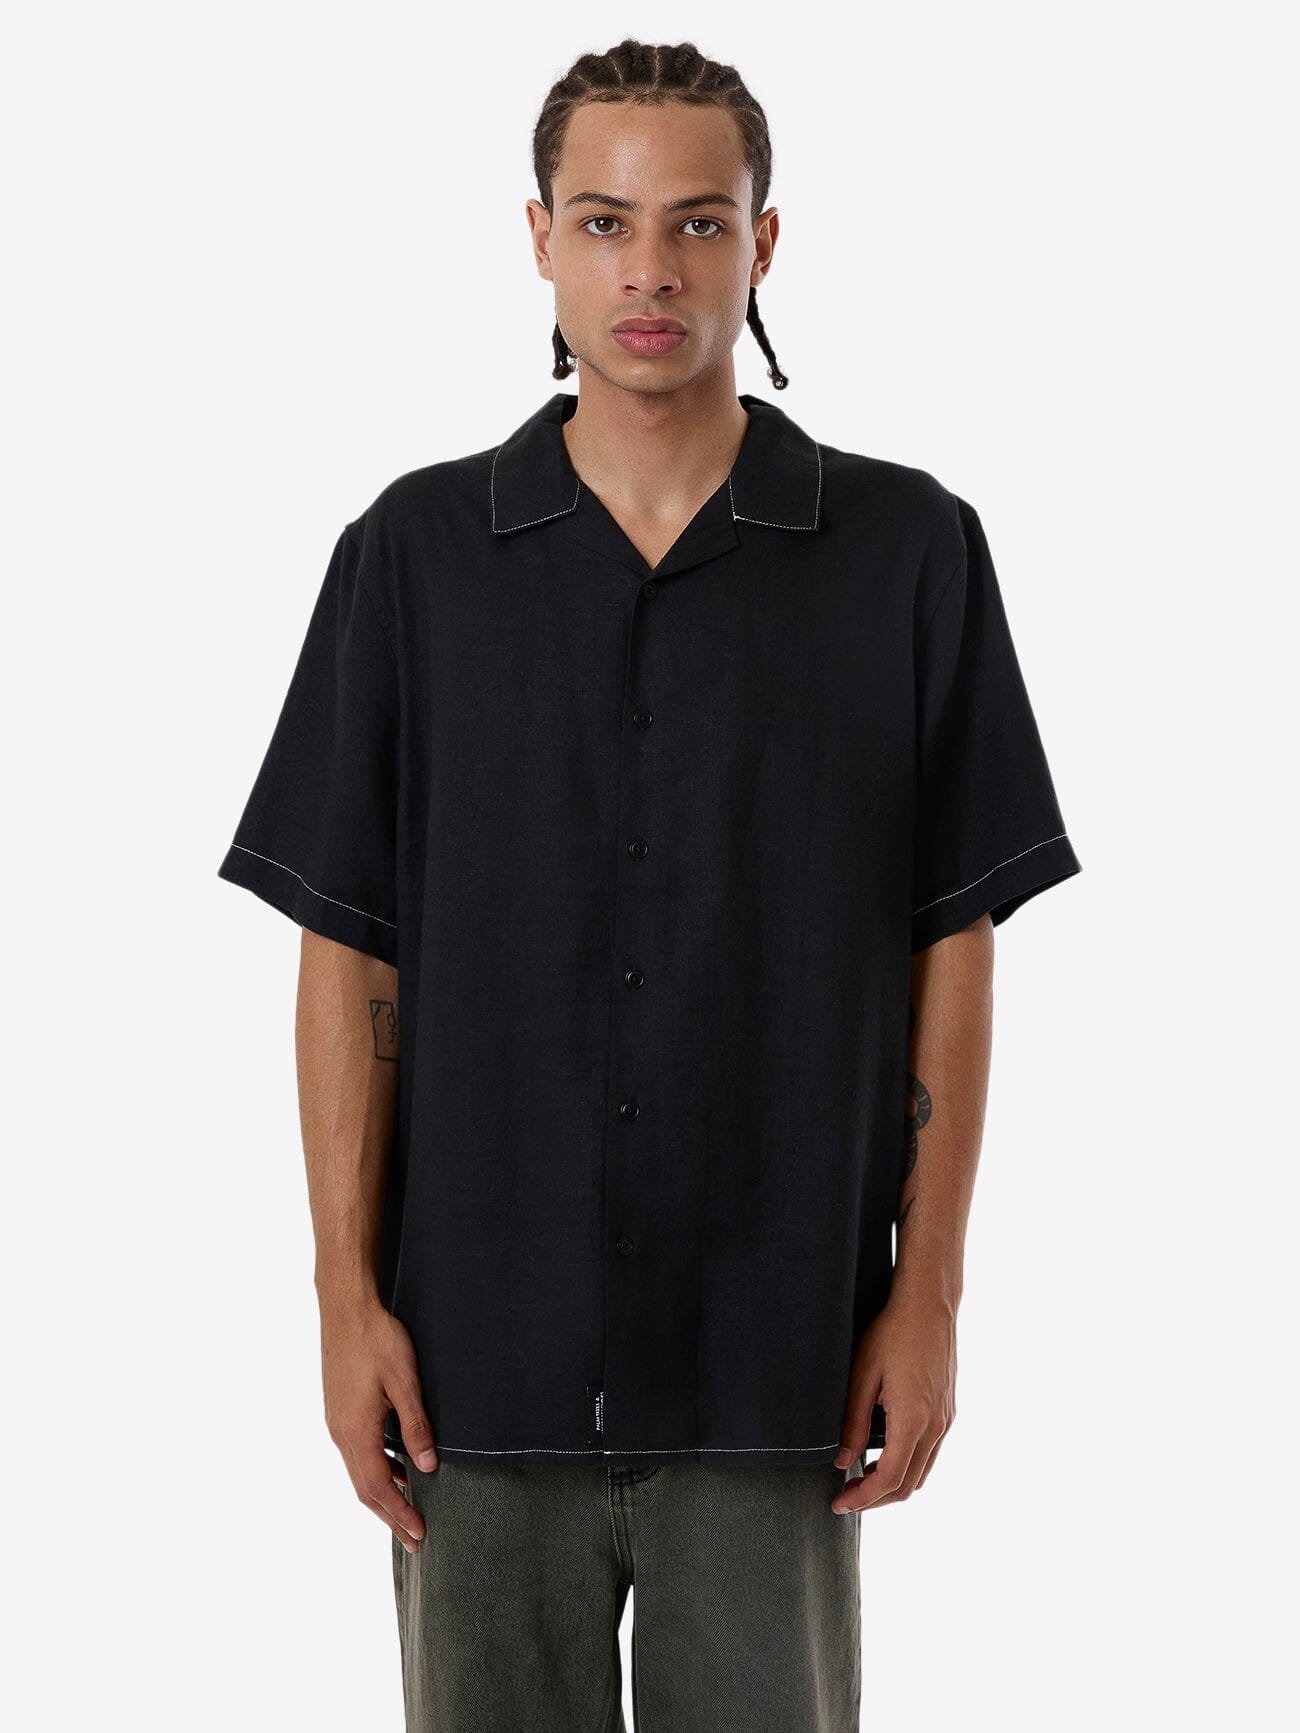 Hemp Minimal Thrills Contrast Stitch Bowling Shirt - Black